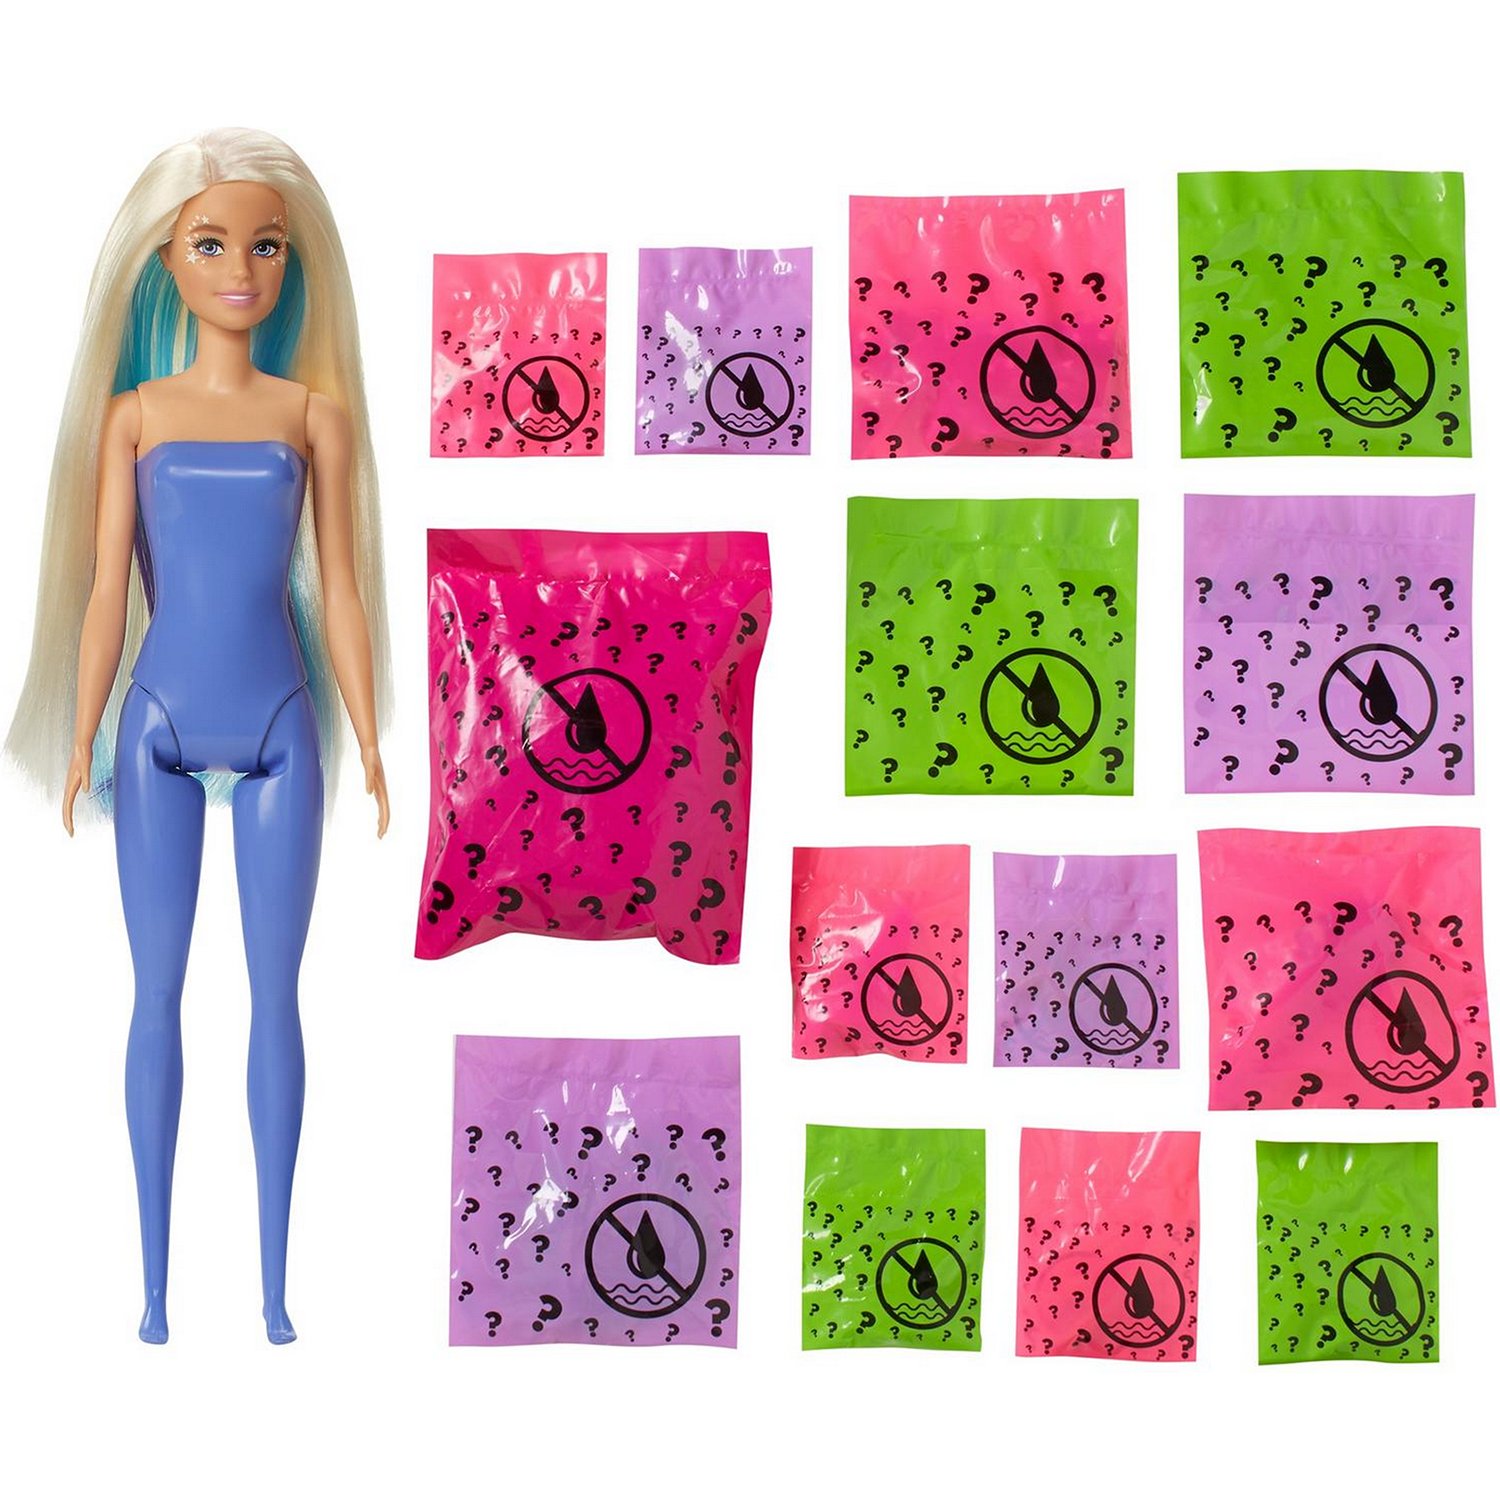 Кукла Barbie с сюрпризами внутри упаковки Фея, GXV94